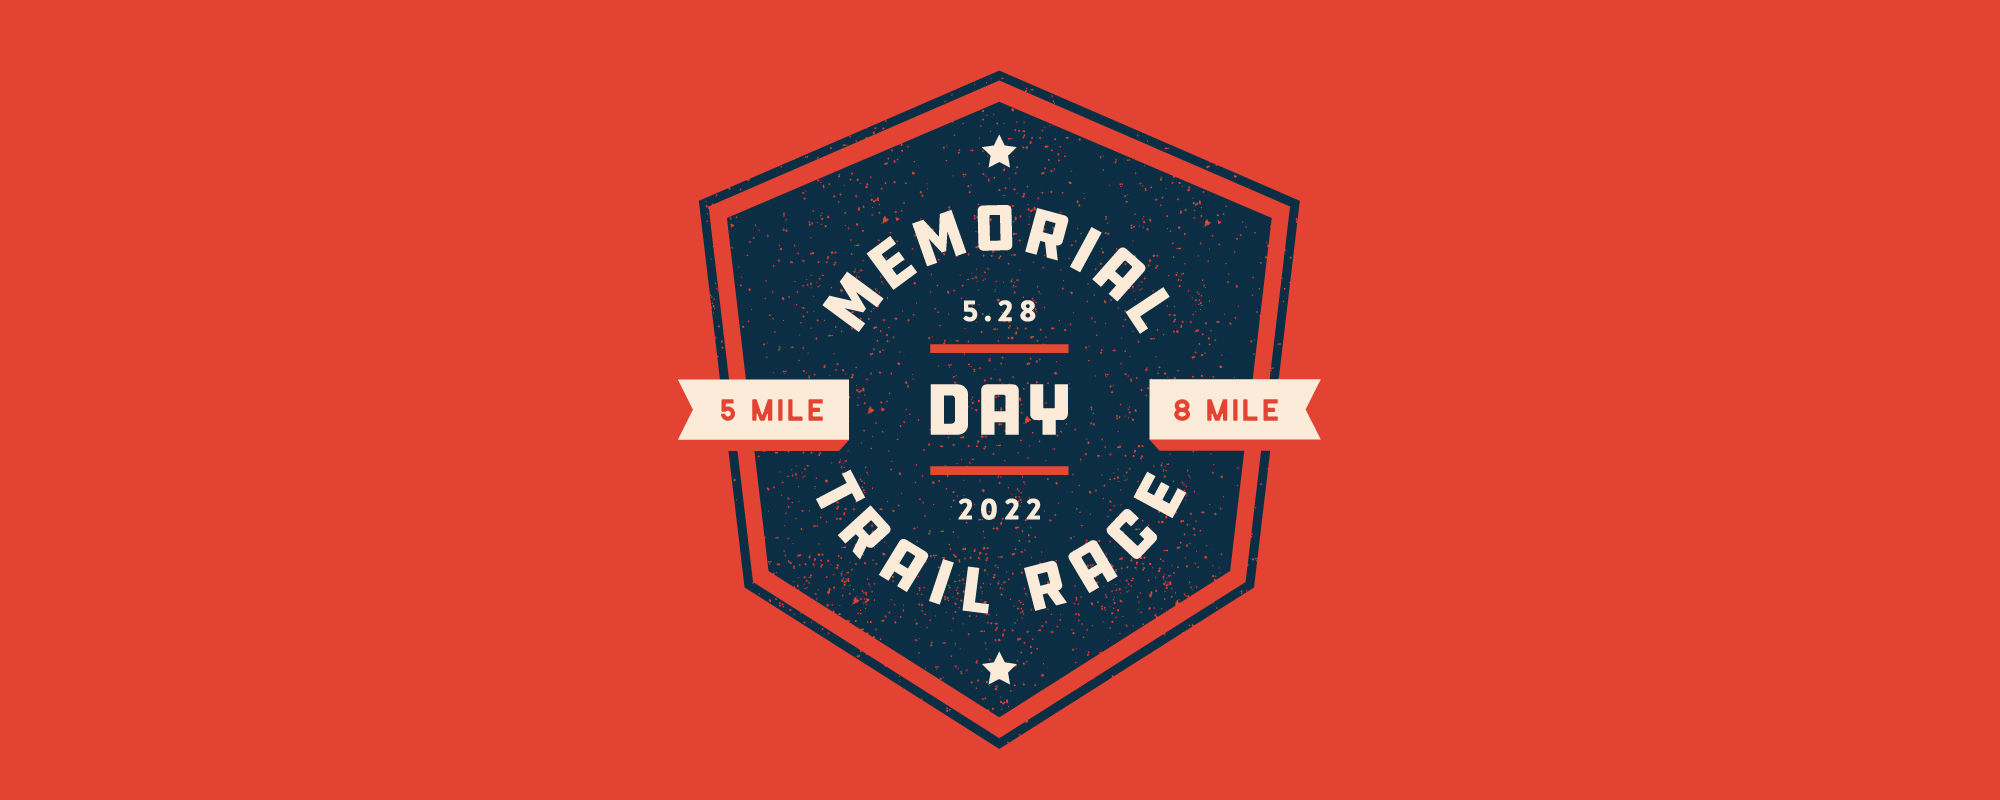 2022 Memorial Day Trail Race Creative